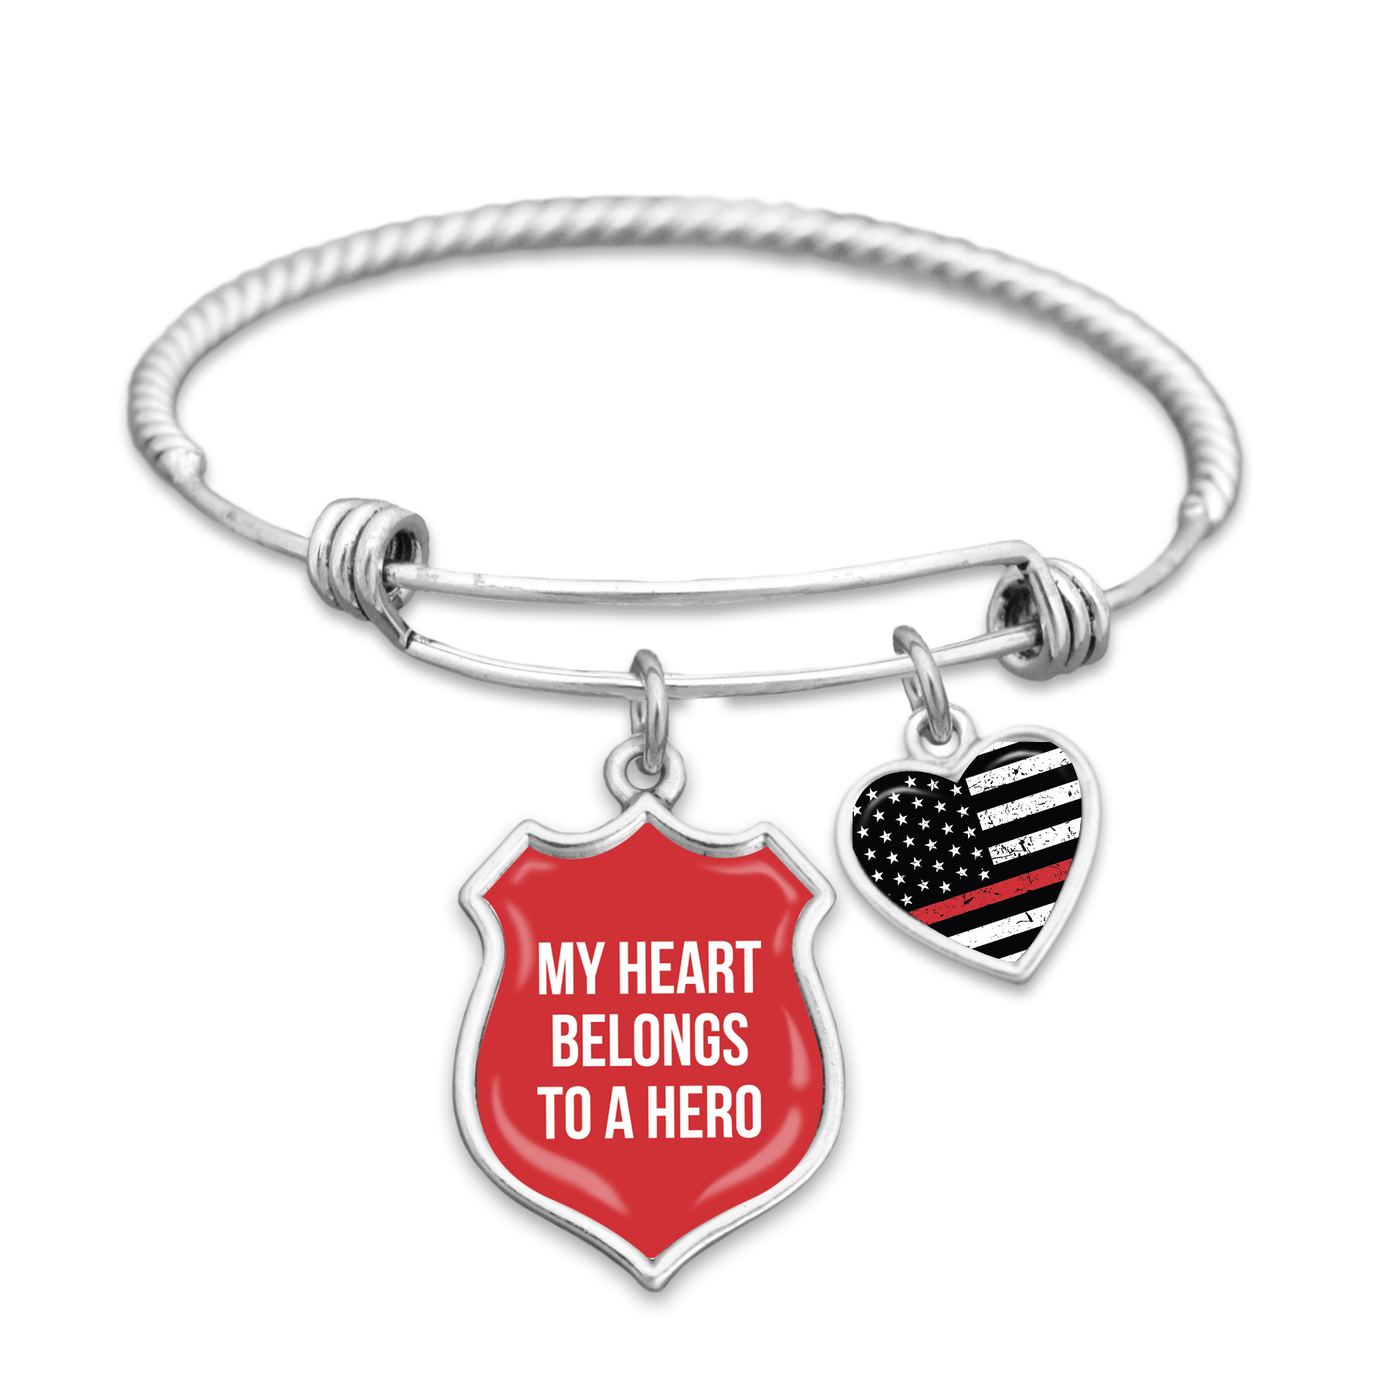 My Heart Belongs To A Hero Thin Red Line Charm Bracelet